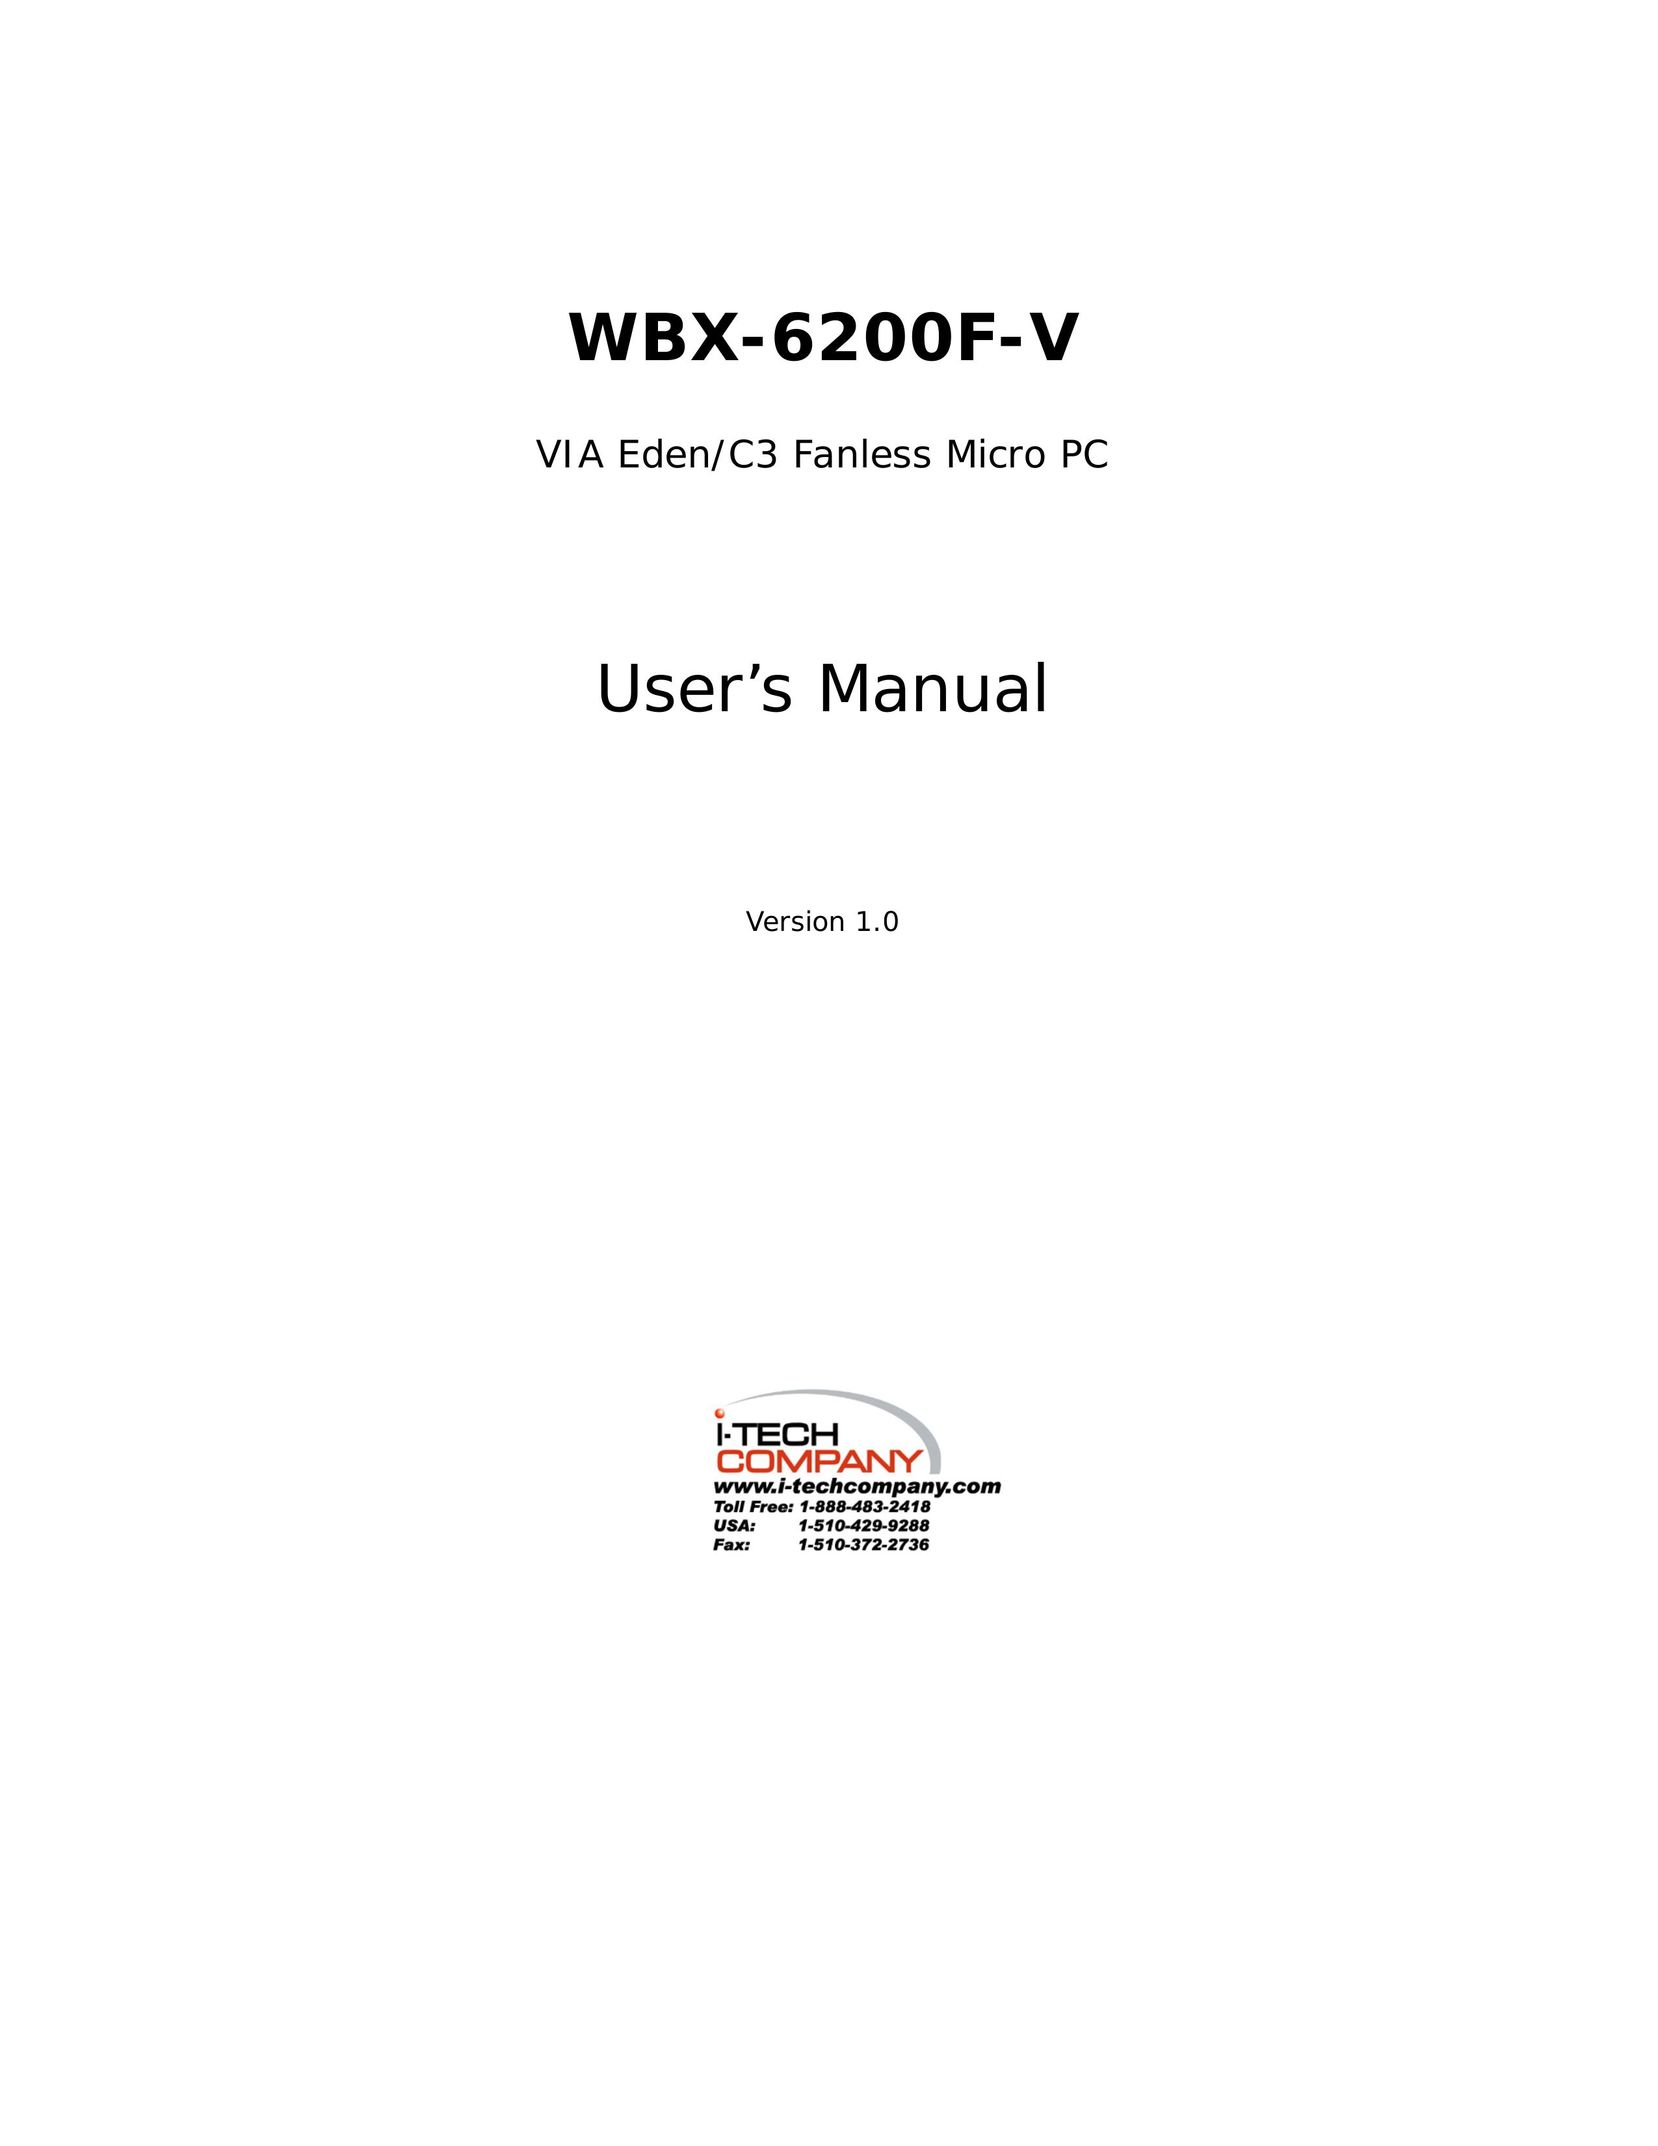 I-Tech Company WBX-6200F-V DVD Player User Manual